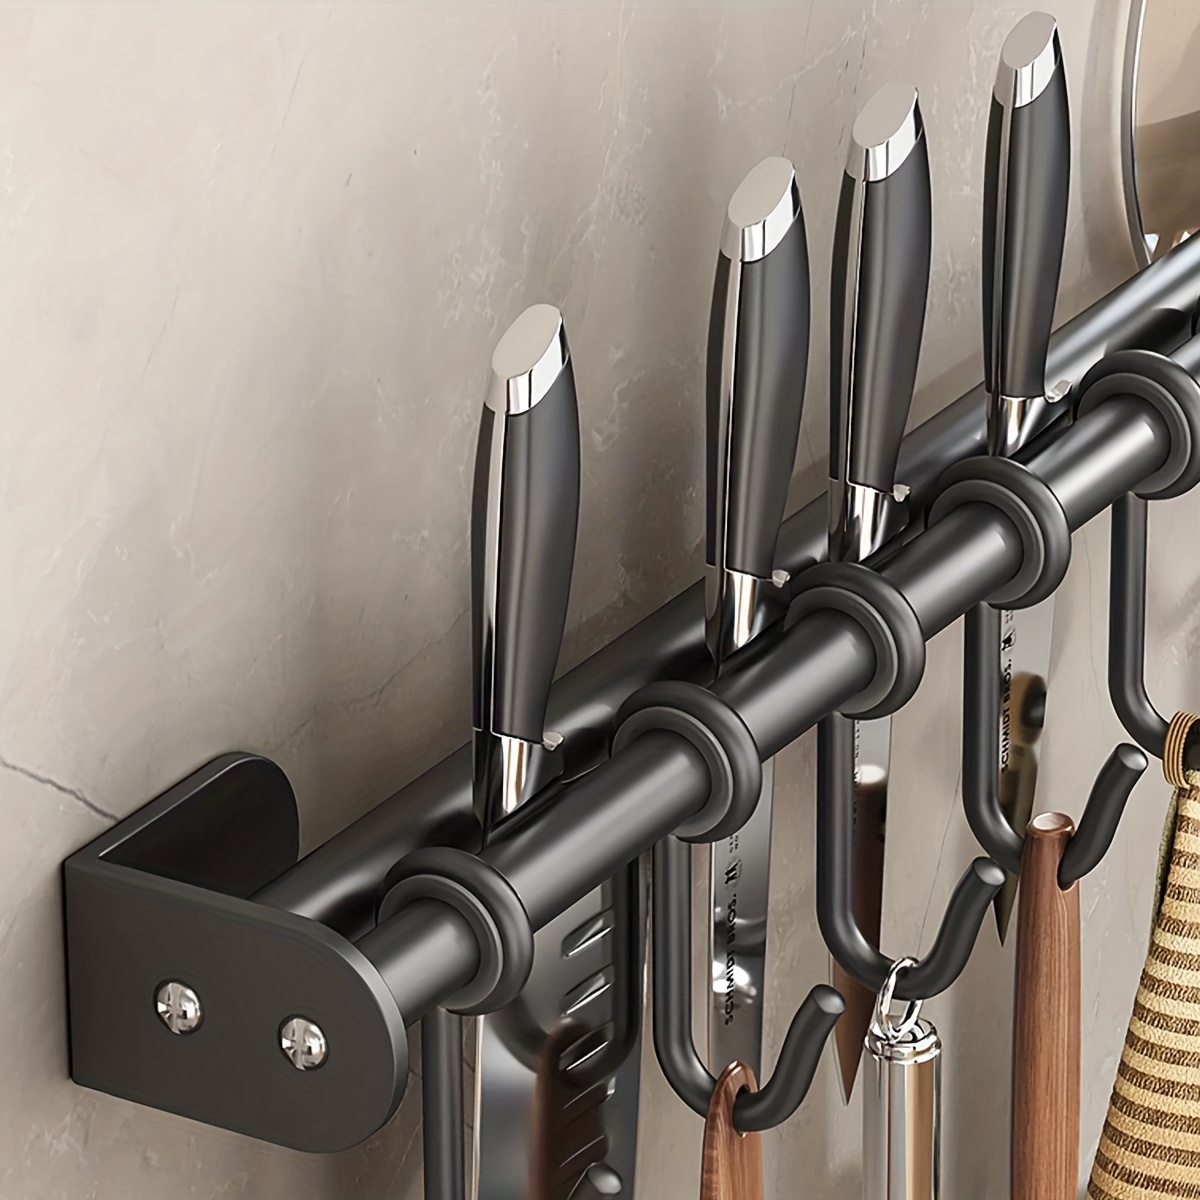 1pc Wall Mounted Kitchen Utensil Rack, Modern Wall Hanging Rod, Storage  Hook Shelf, Knife Spatula And Spoon Hanger, Kitchenware Storage Rack  Organizer